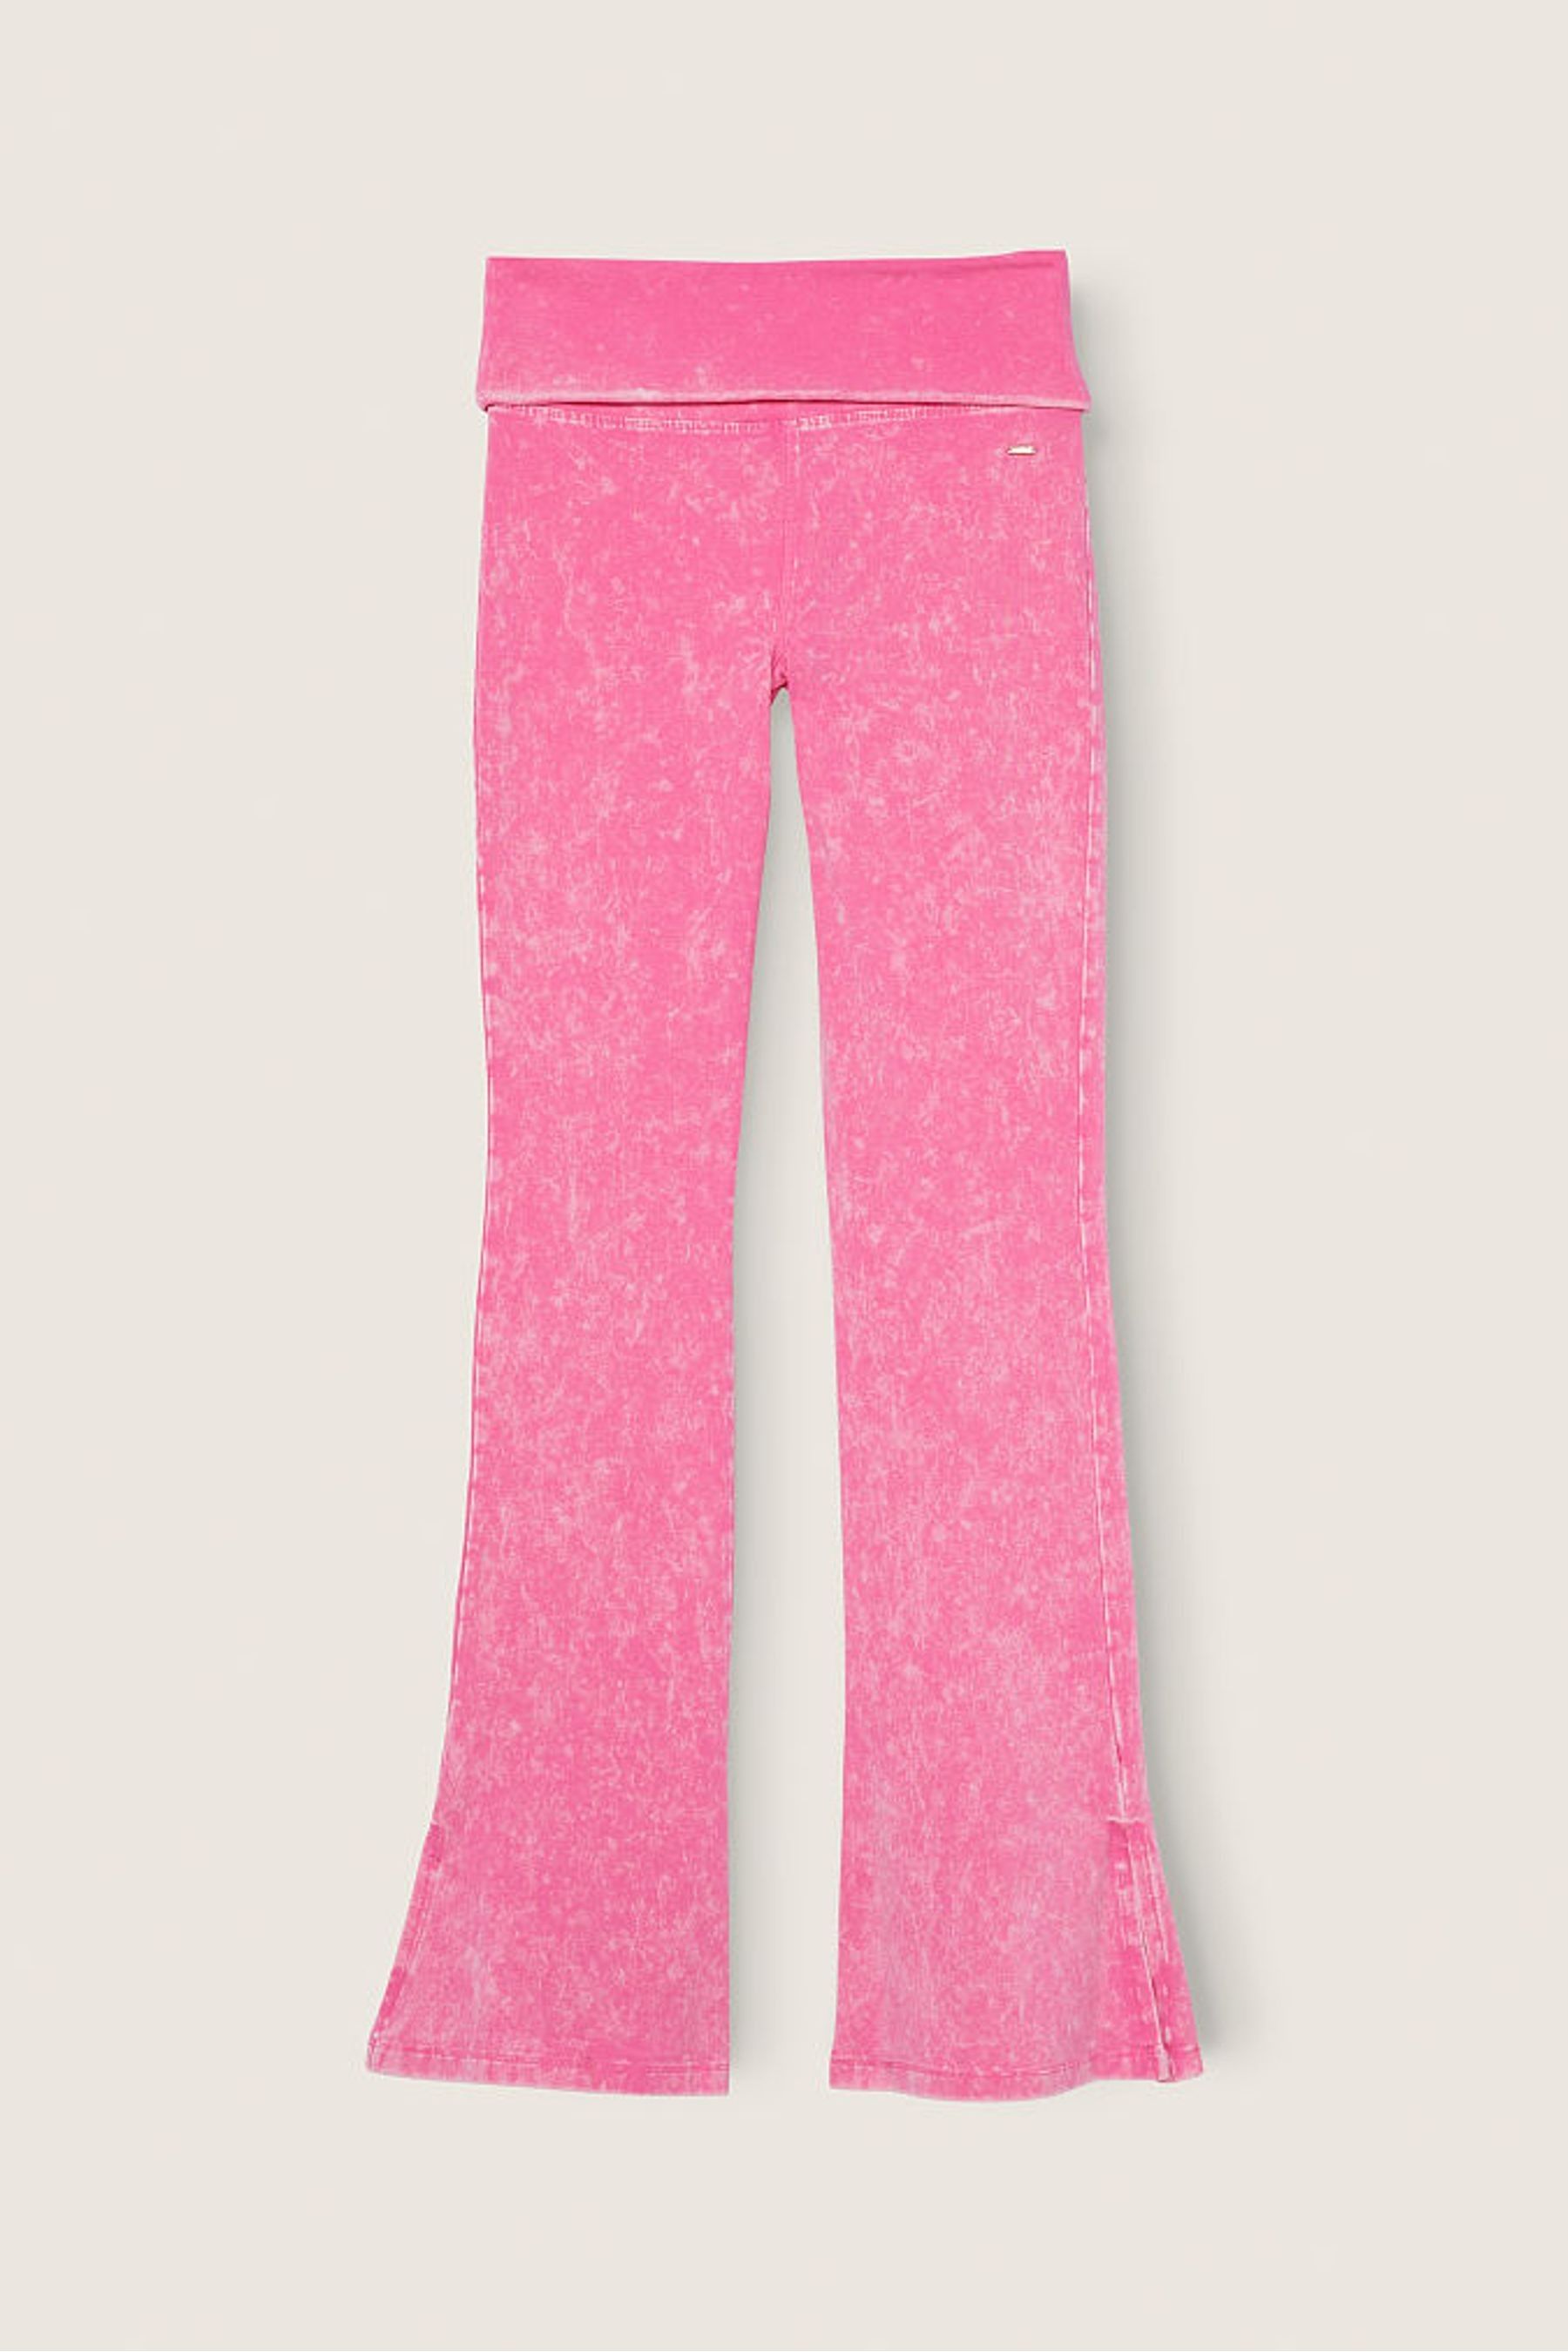 Buy Victoria's Secret PINK Foldover Flare Legging from the Victoria's ...